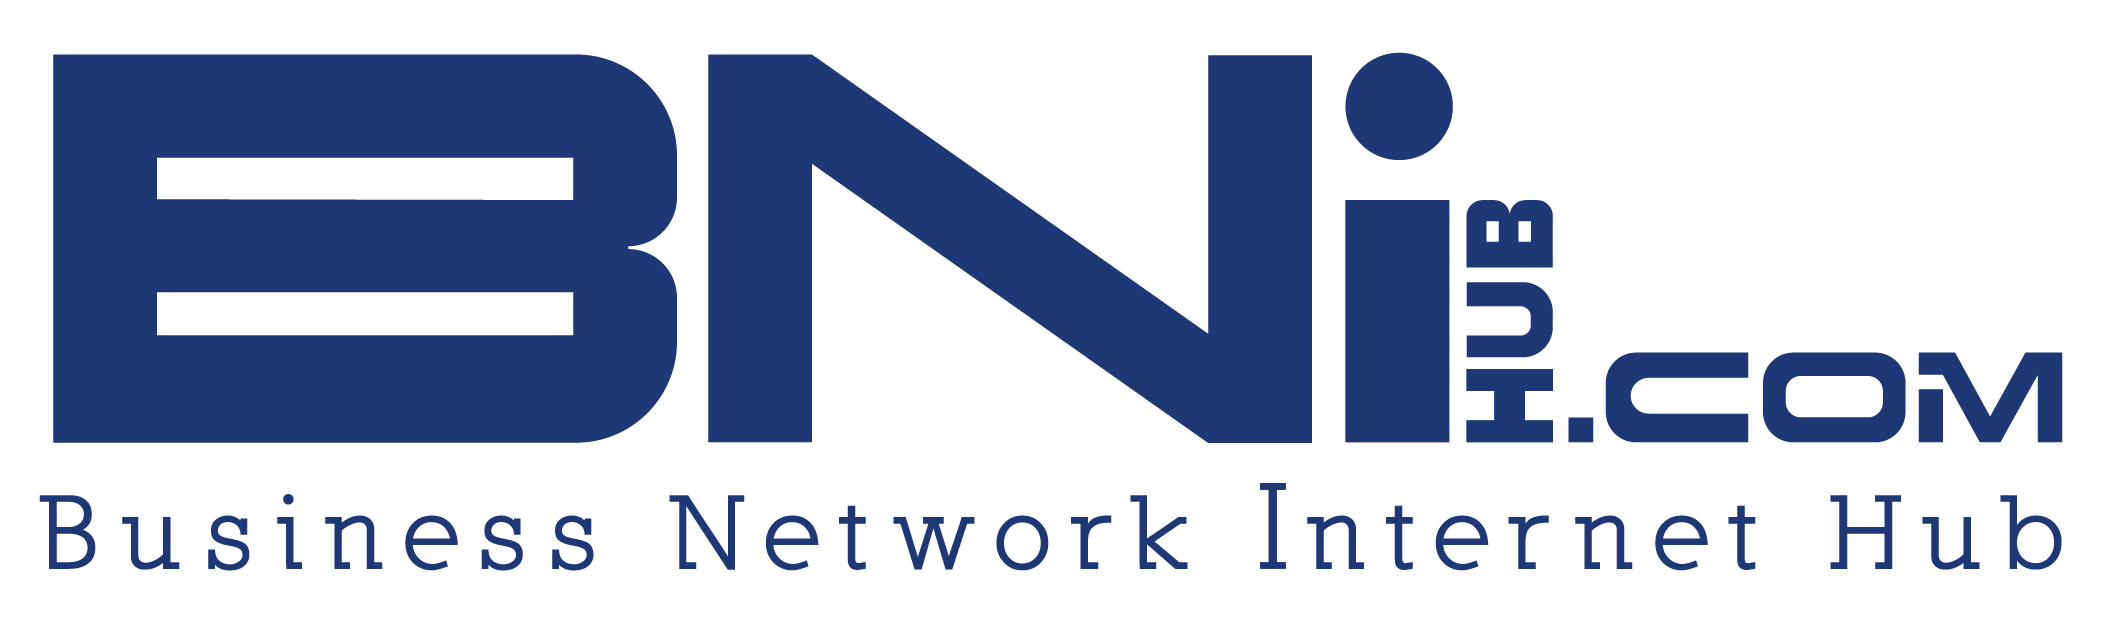 Business Network Internet Hub